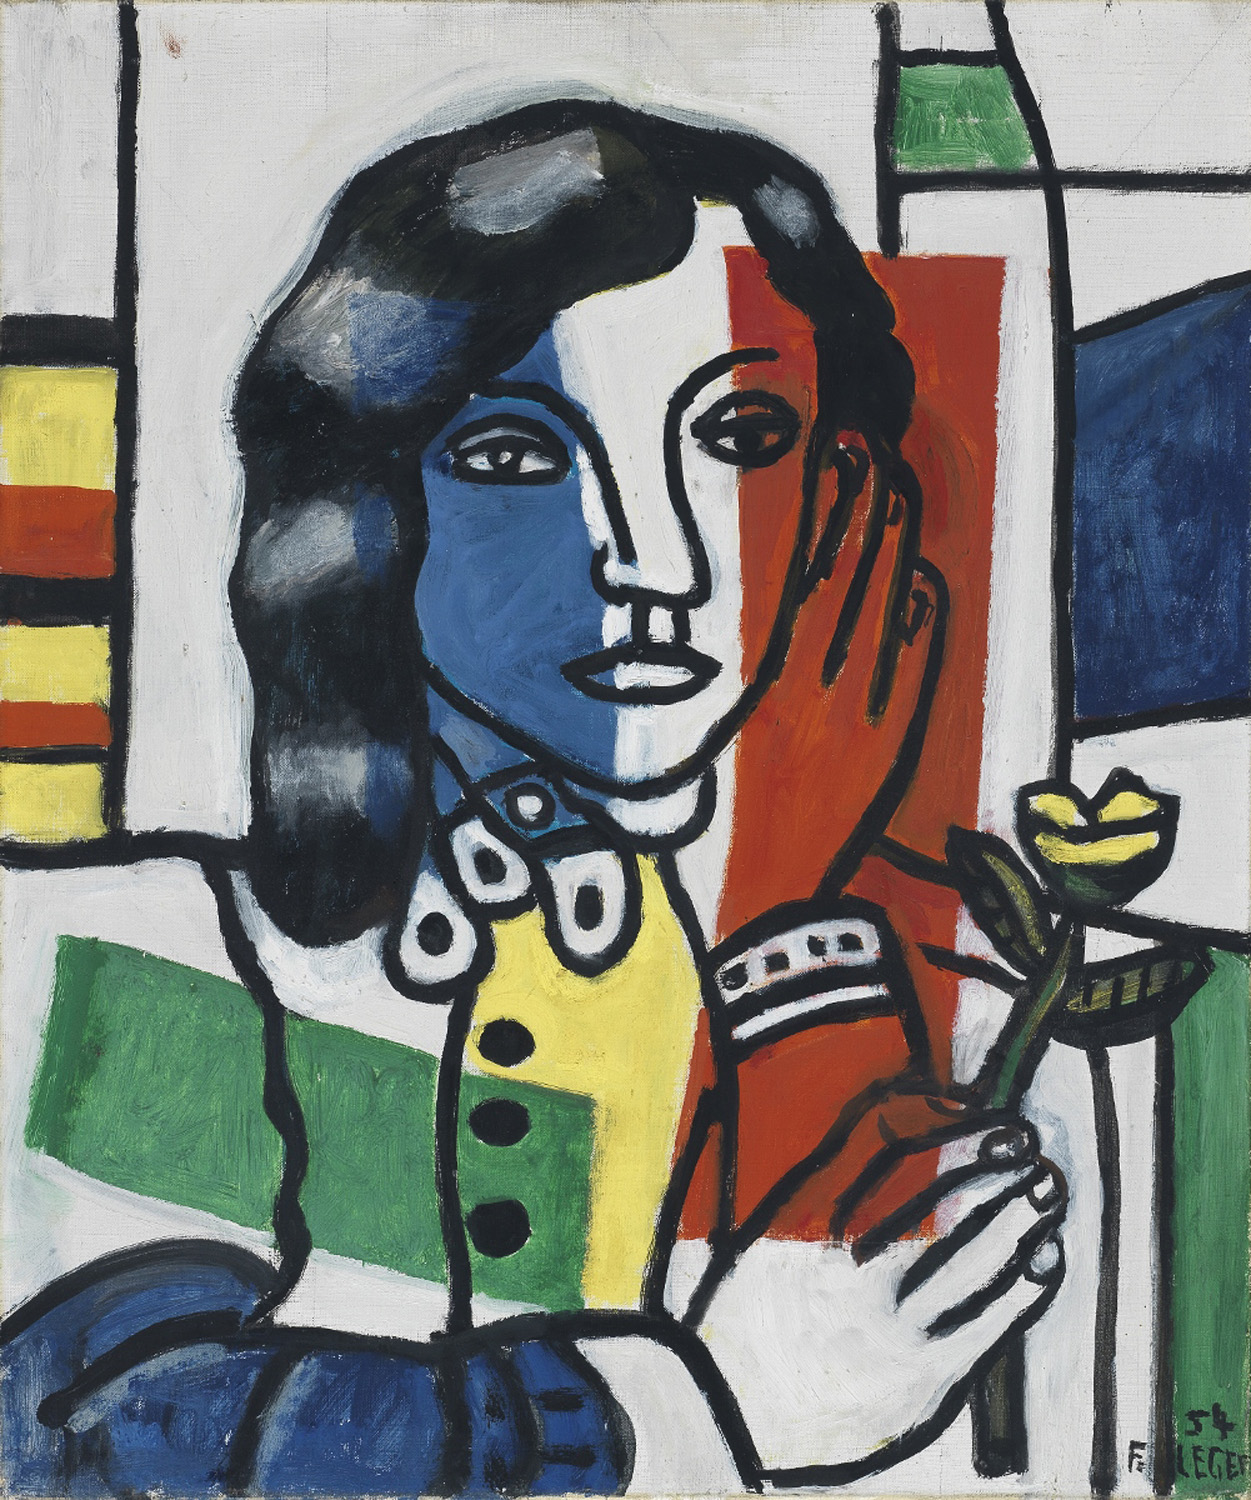 Jeune fille tenant une fleur. Léger, Fernand (French, 1881-1955). Oil on canvas, height 55.0 cm, width 46.0 cm, 1954.